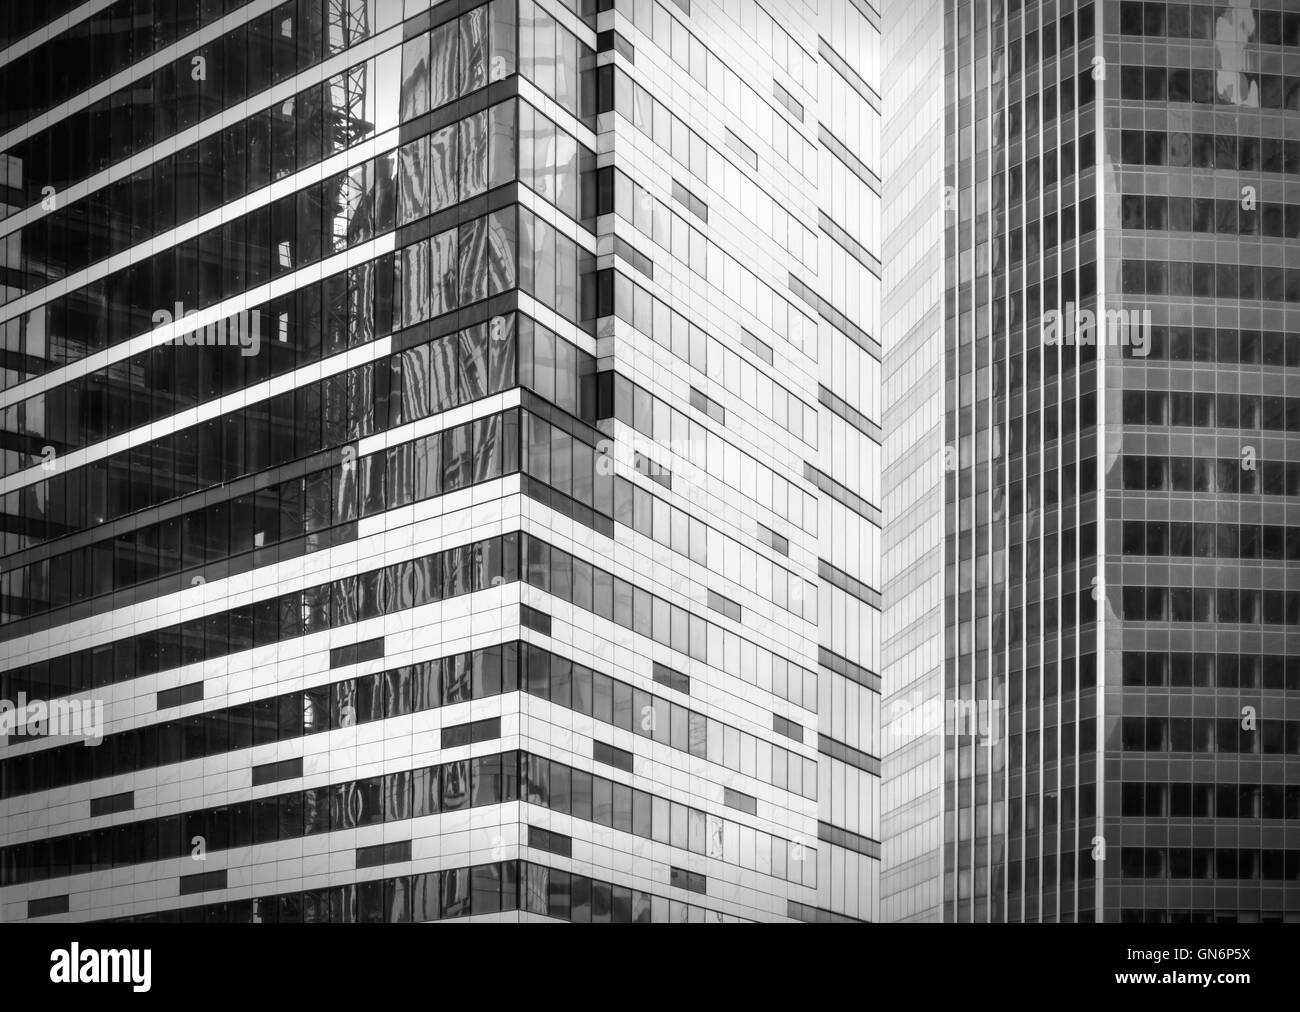 Ver fragmento de los negocios modernos edificios de vidrio con efecto monocromo Foto de stock